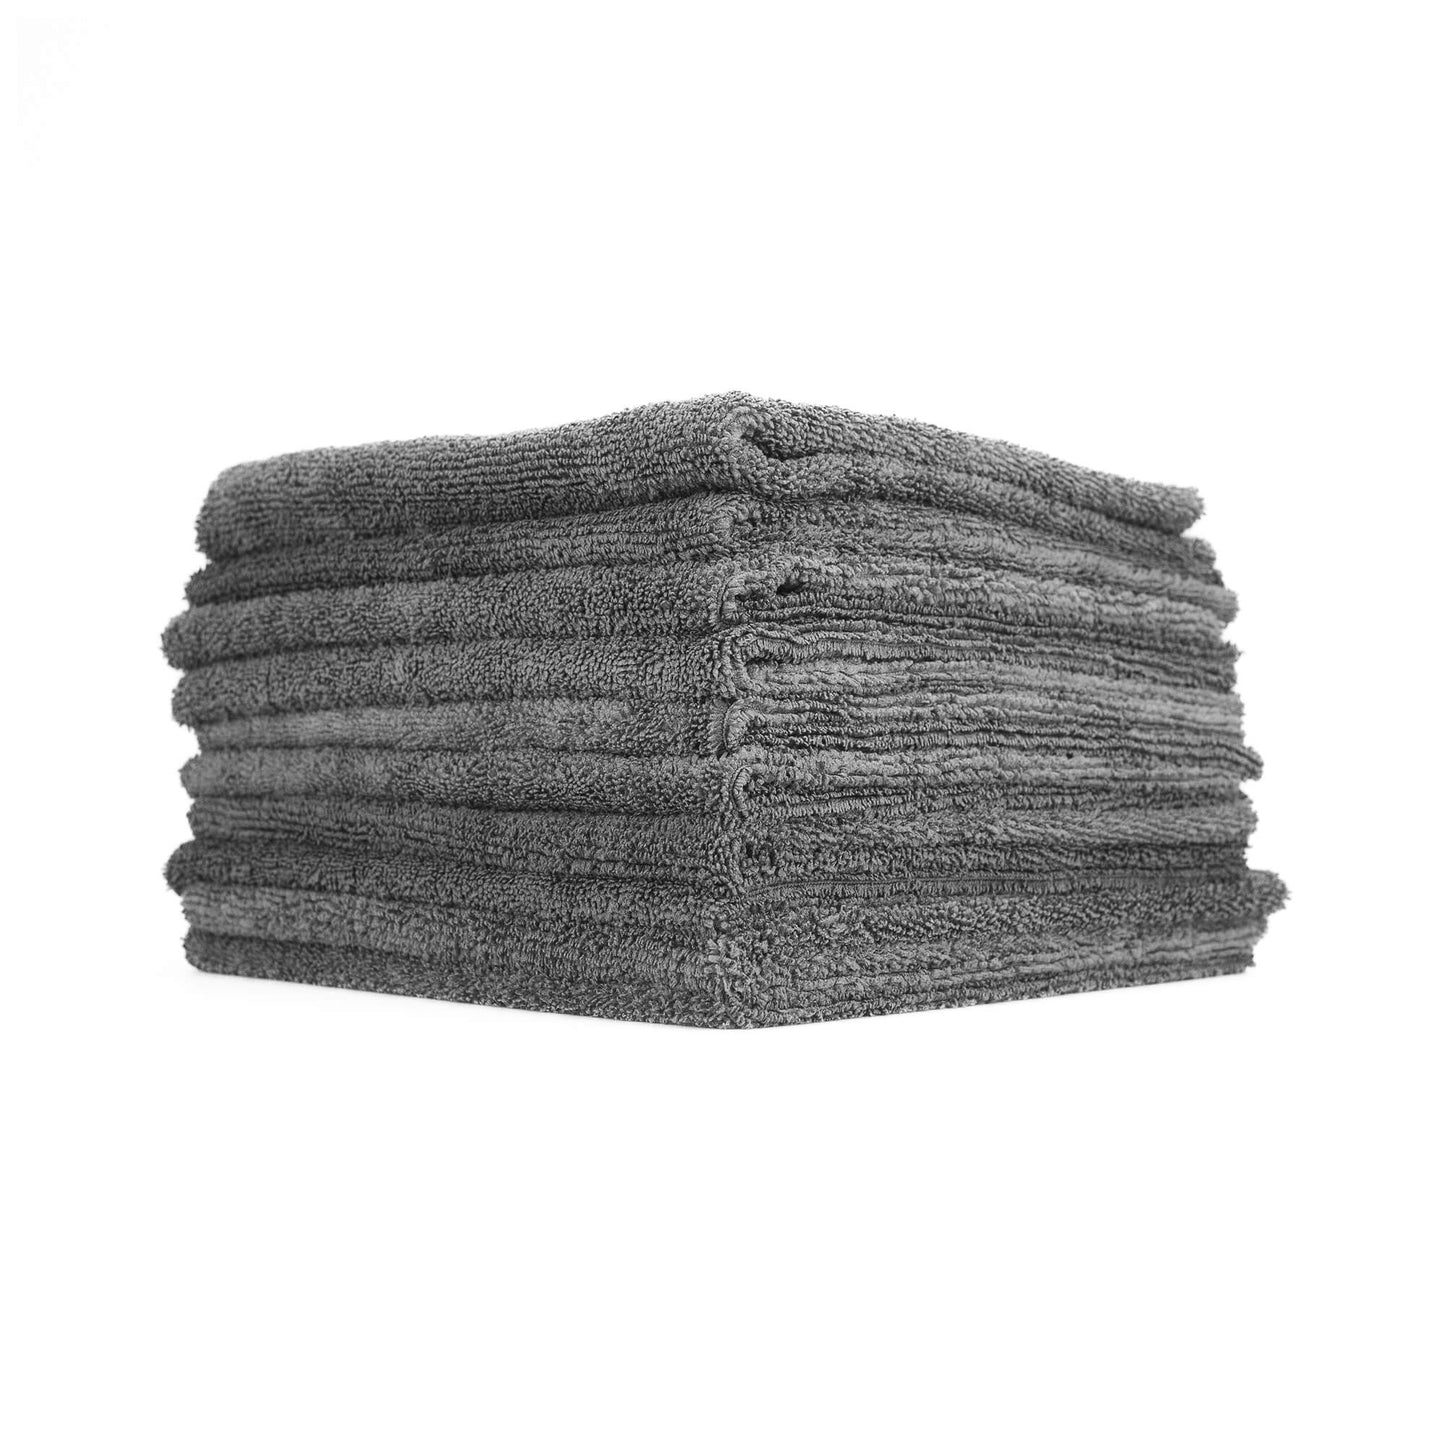 Edgeless 365 Premium Microfiber Terry Detailing Towel - 10 Pack